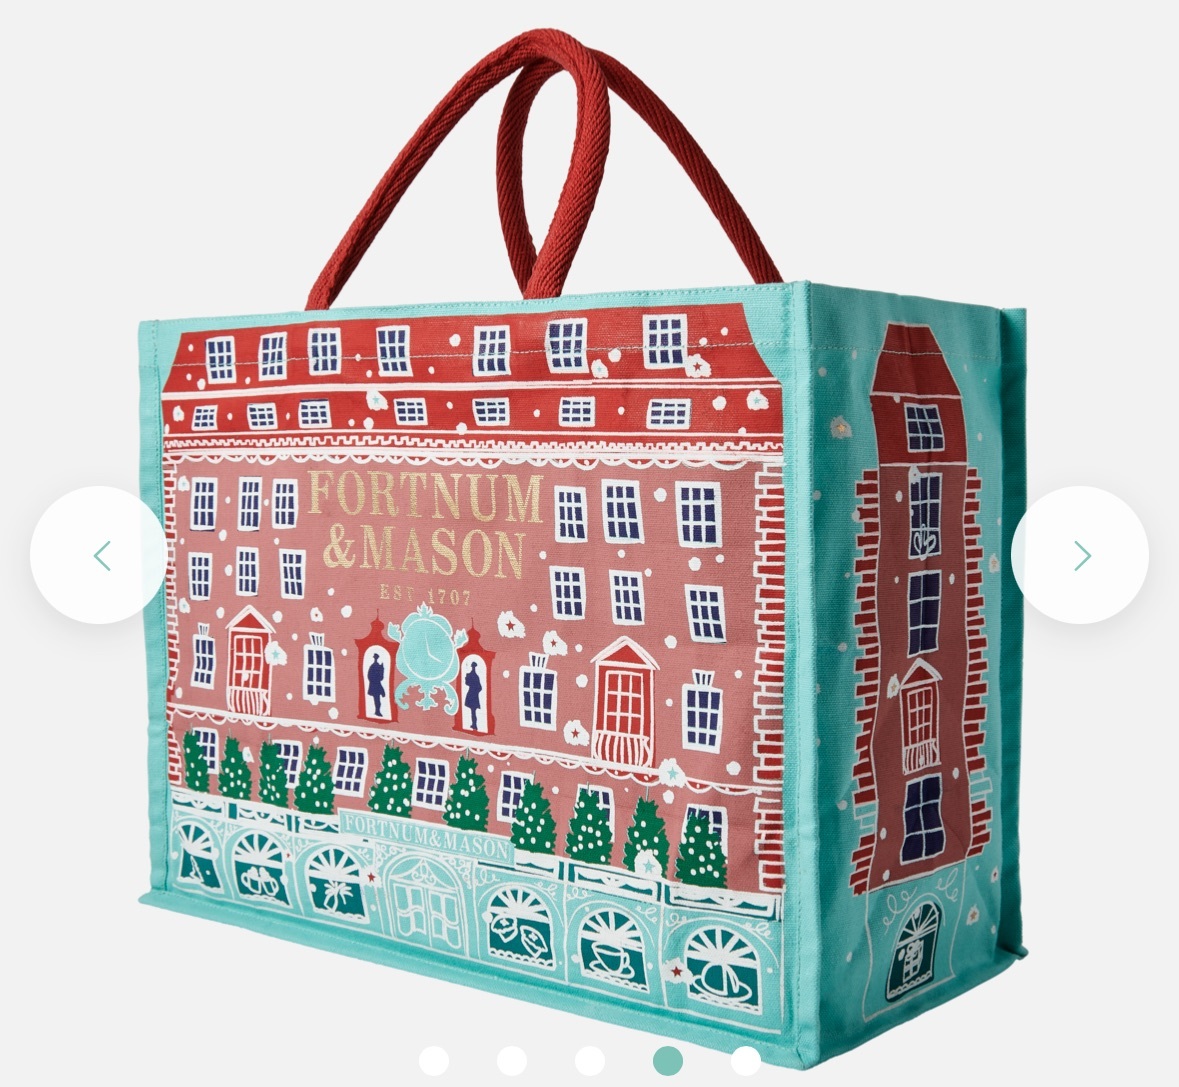  four tonam&meison Christmas limitation Piccadilly tote bag eko-bag Britain 